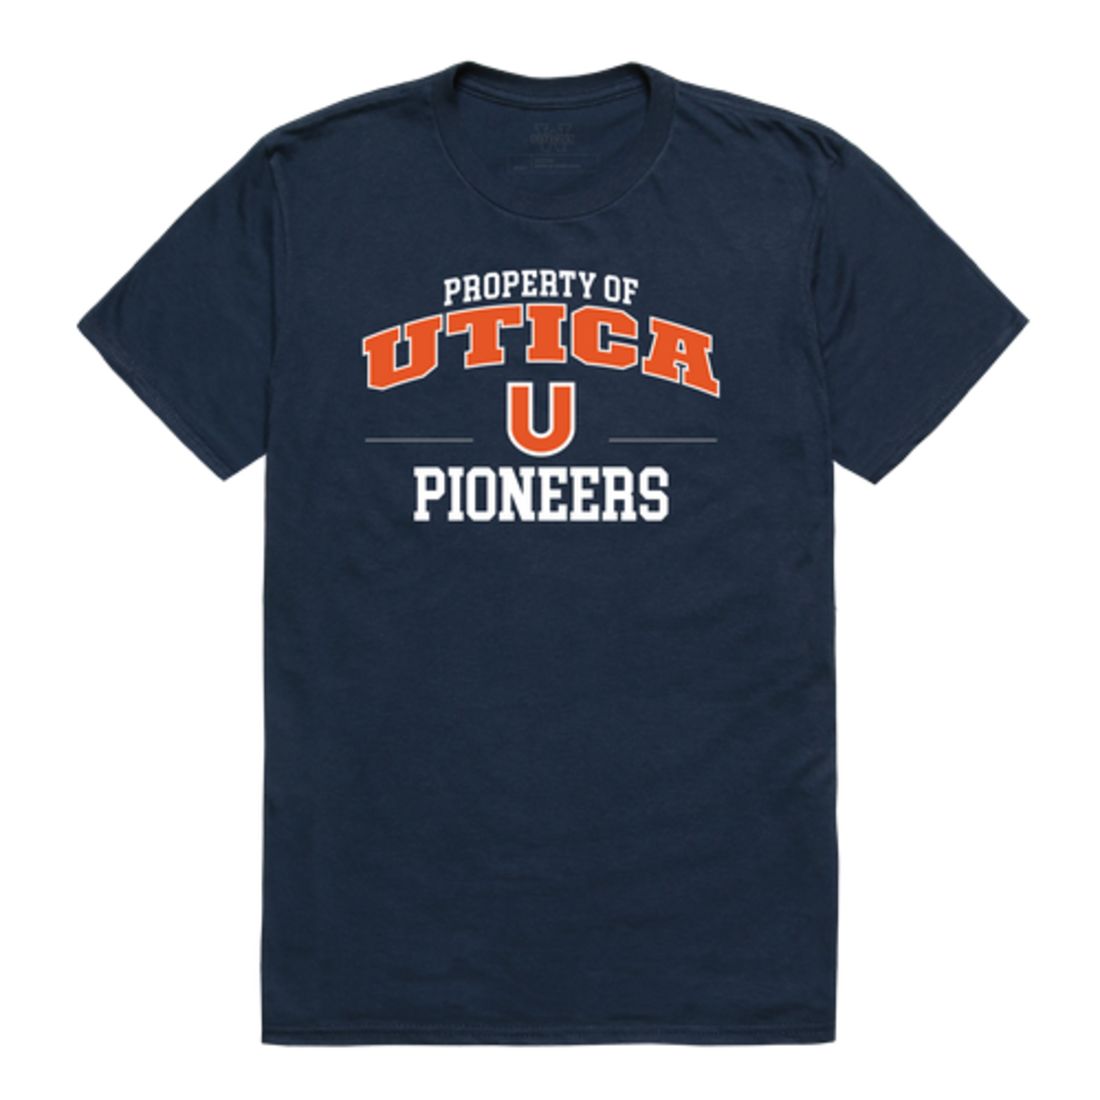 Utica College Pioneers Property T-Shirt Tee